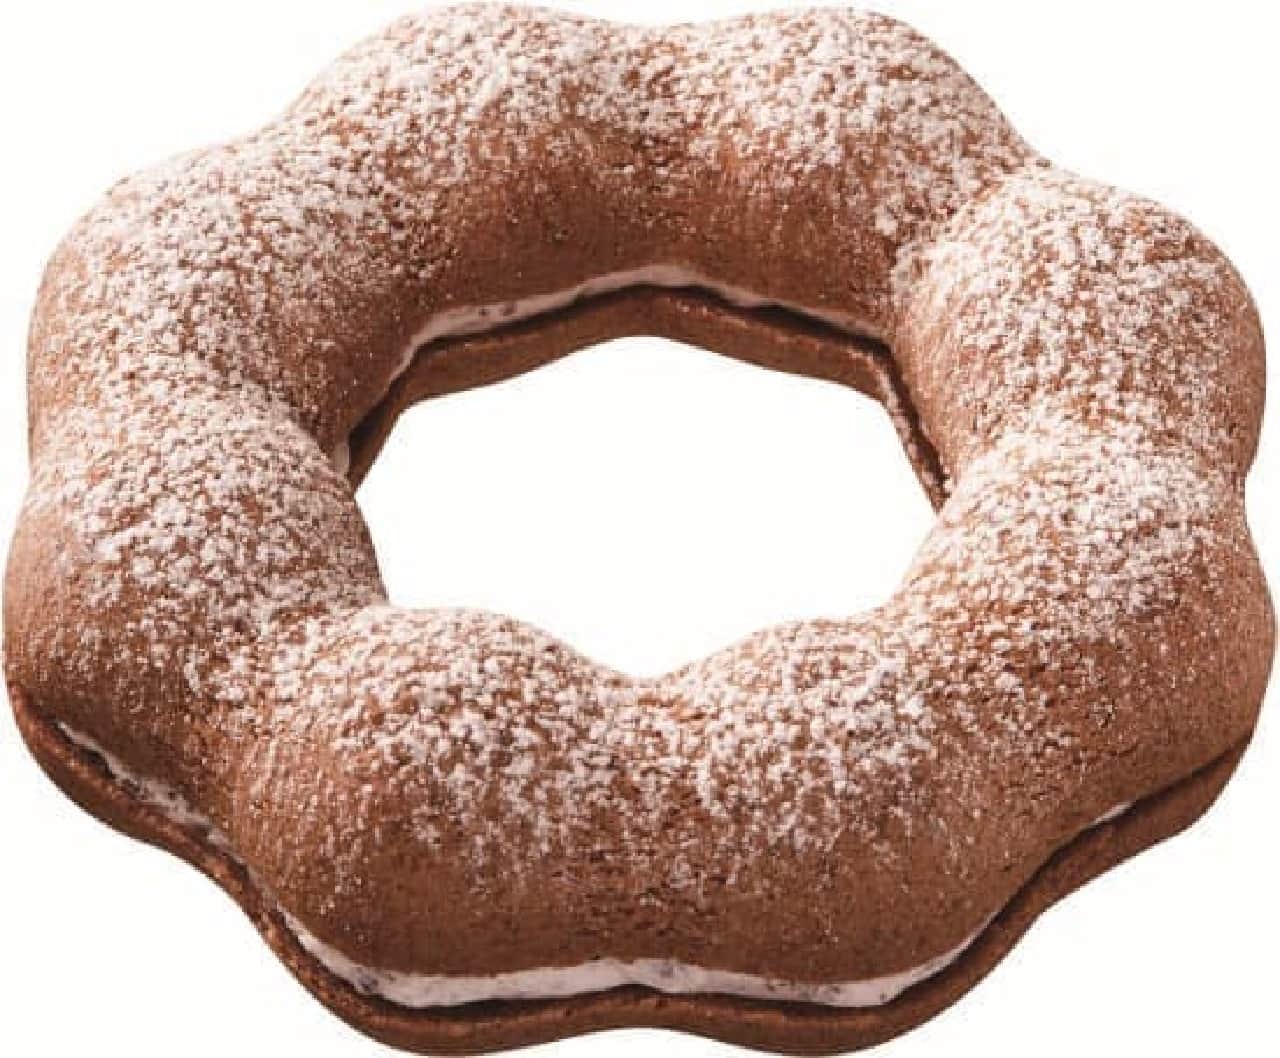 Mister Donut "Pon de Ring Chocolat Whip"